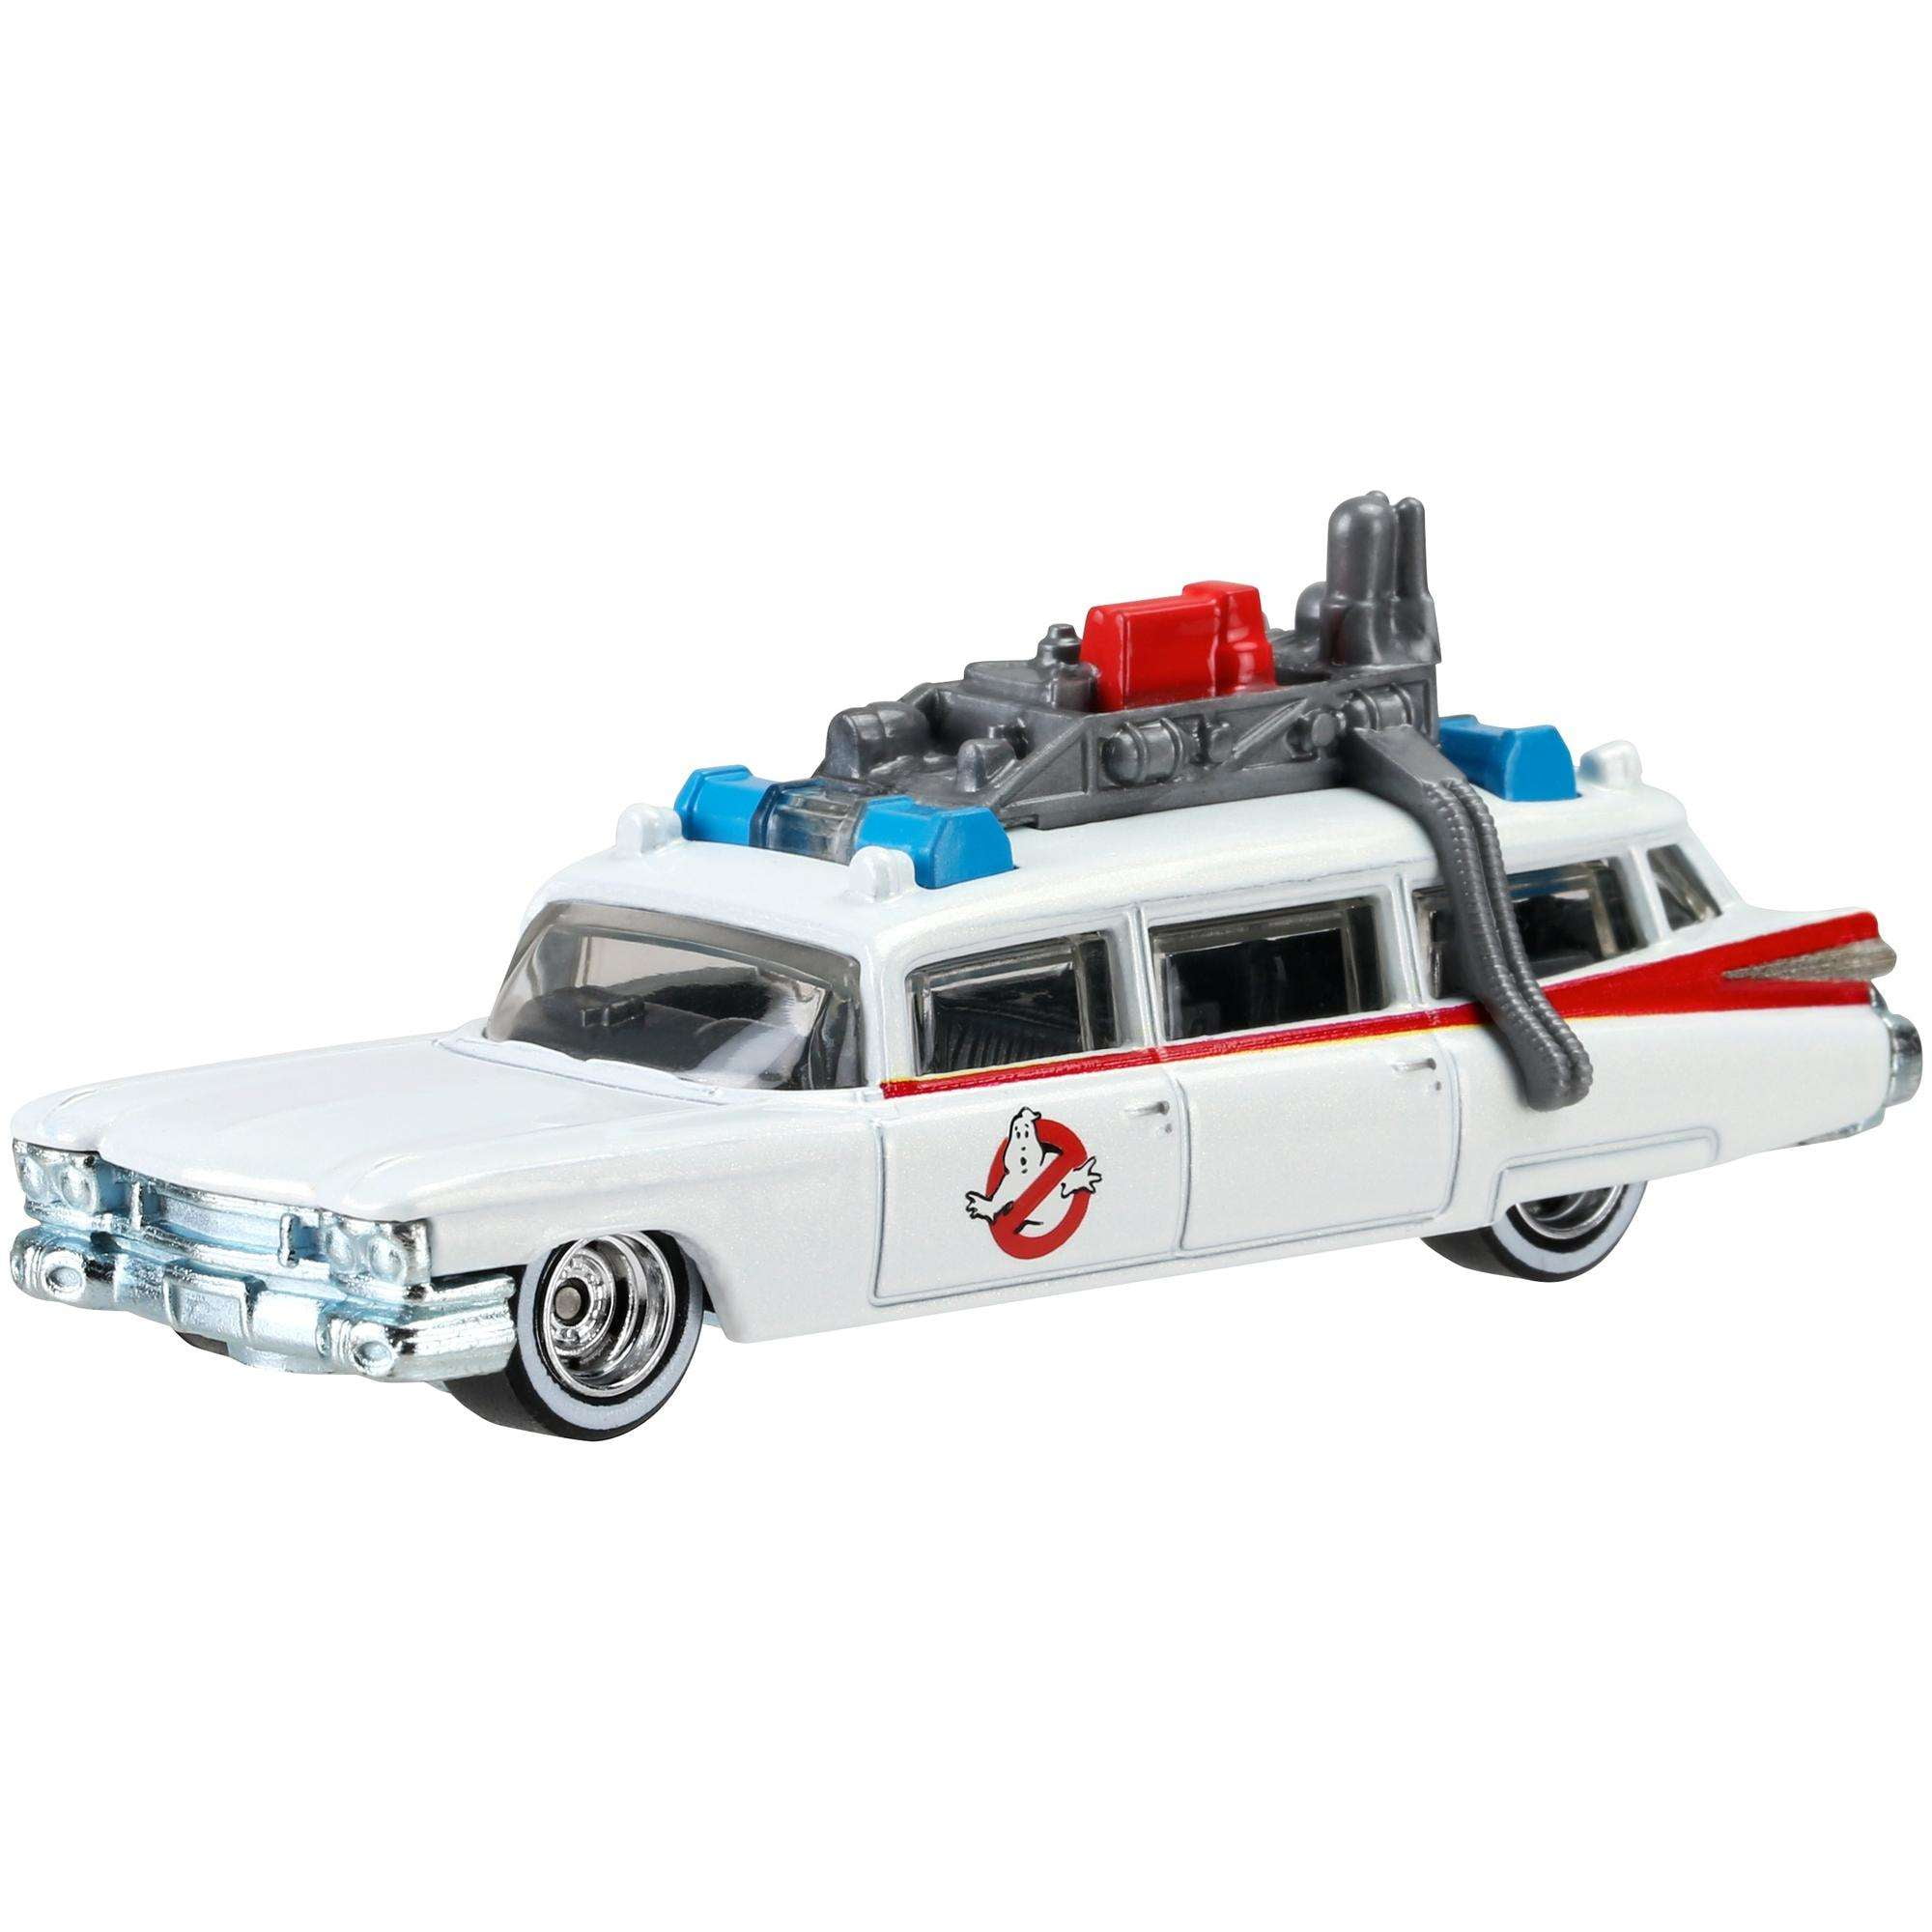 Ghostbusters Auto Mattel Hot Wheels Auswahl an Cars 